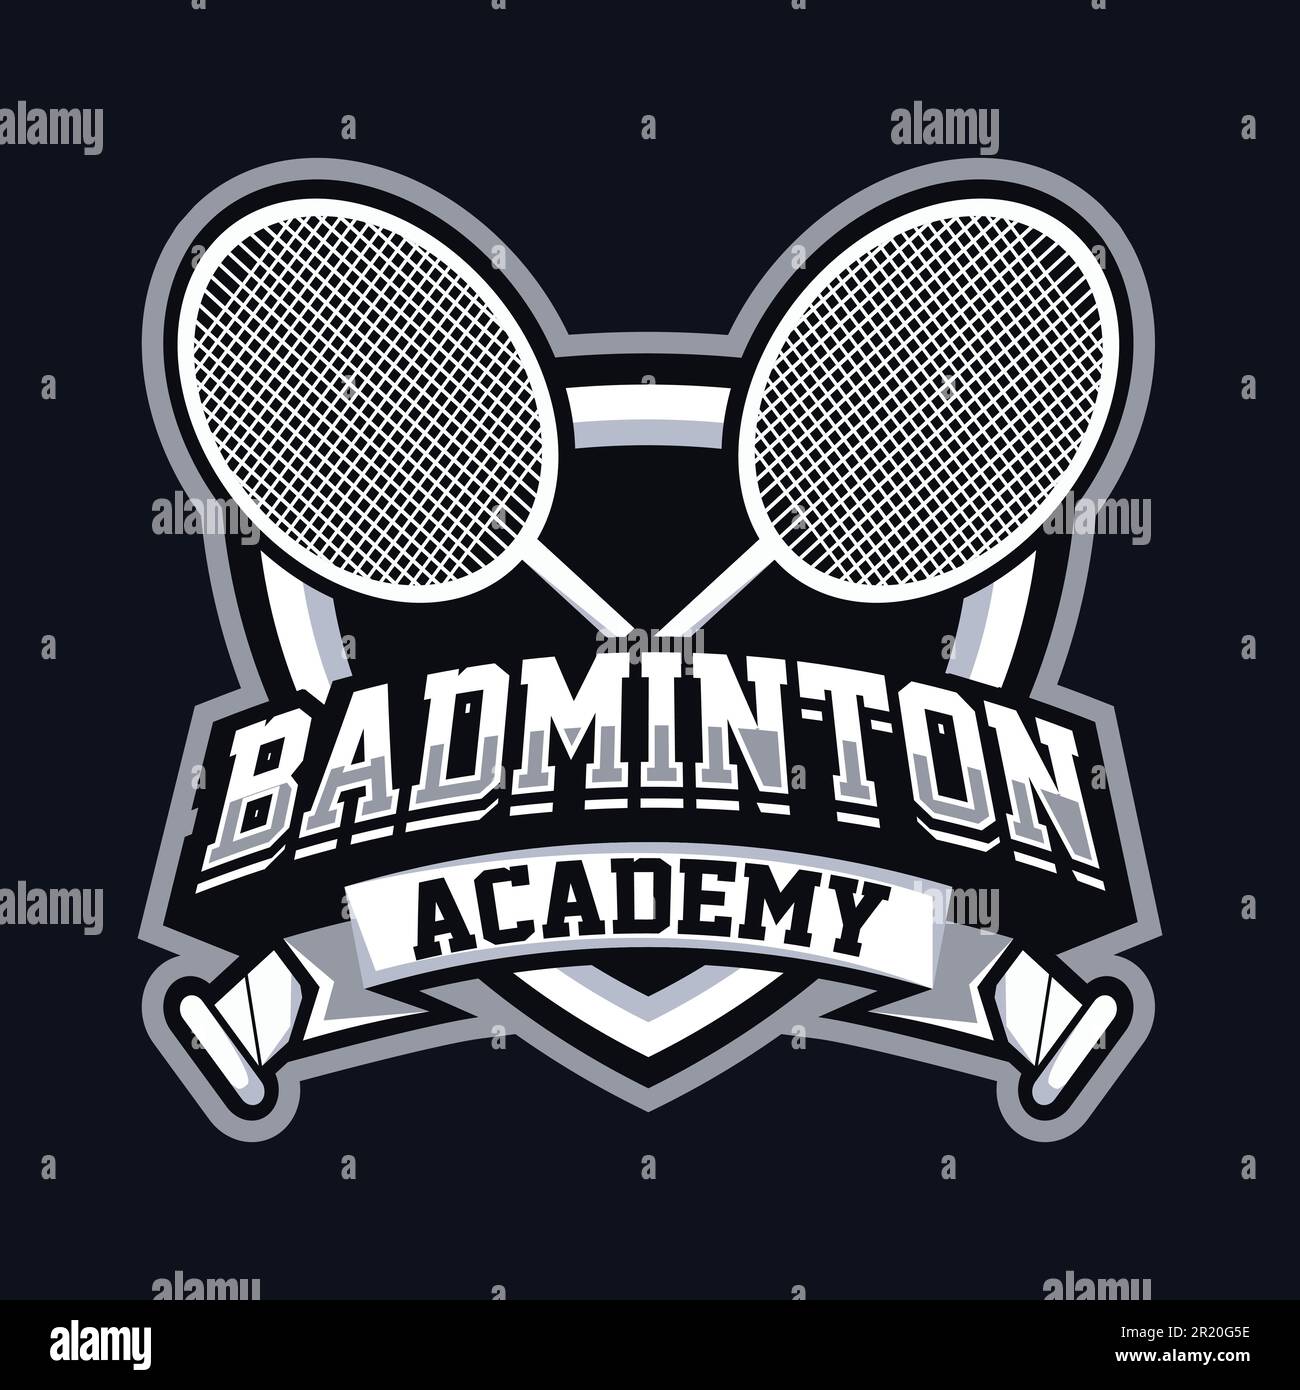 Badminton Academy Mascot Logo Design. Logo illustration for mascot or symbol and identity, emblem sports or e-sports gaming team. Stock Vector